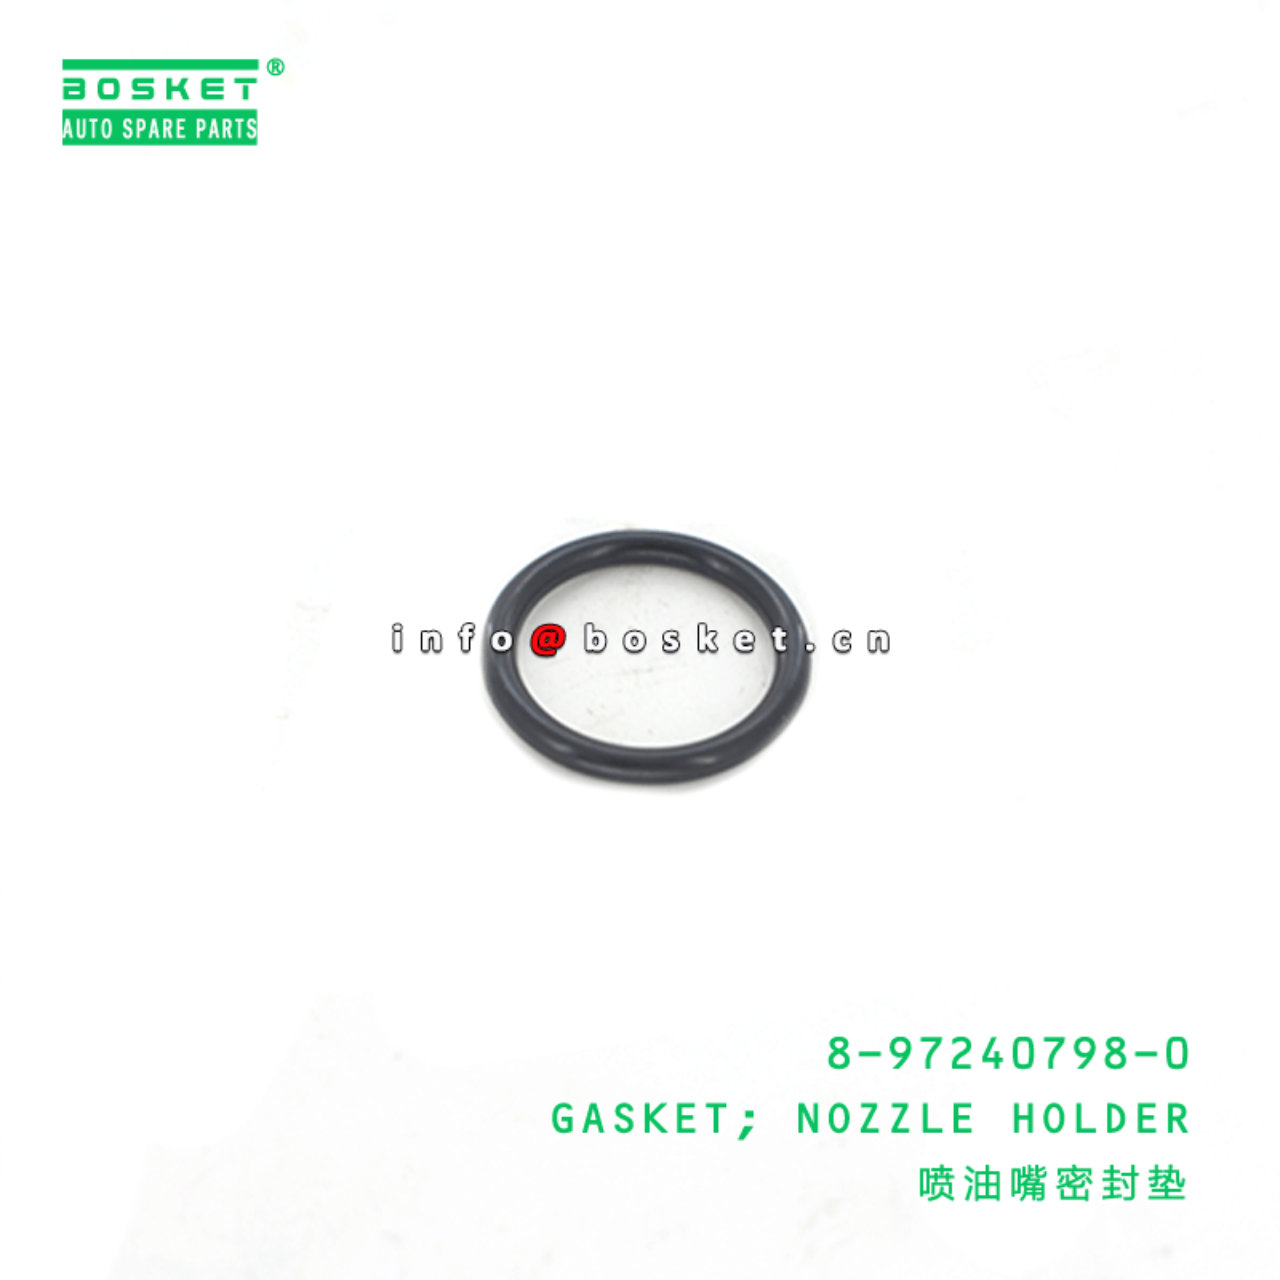 8-97240798-0 Nozzle Holder Gasket 8972407980 Suitable for ISUZU UBUE 4JX1 